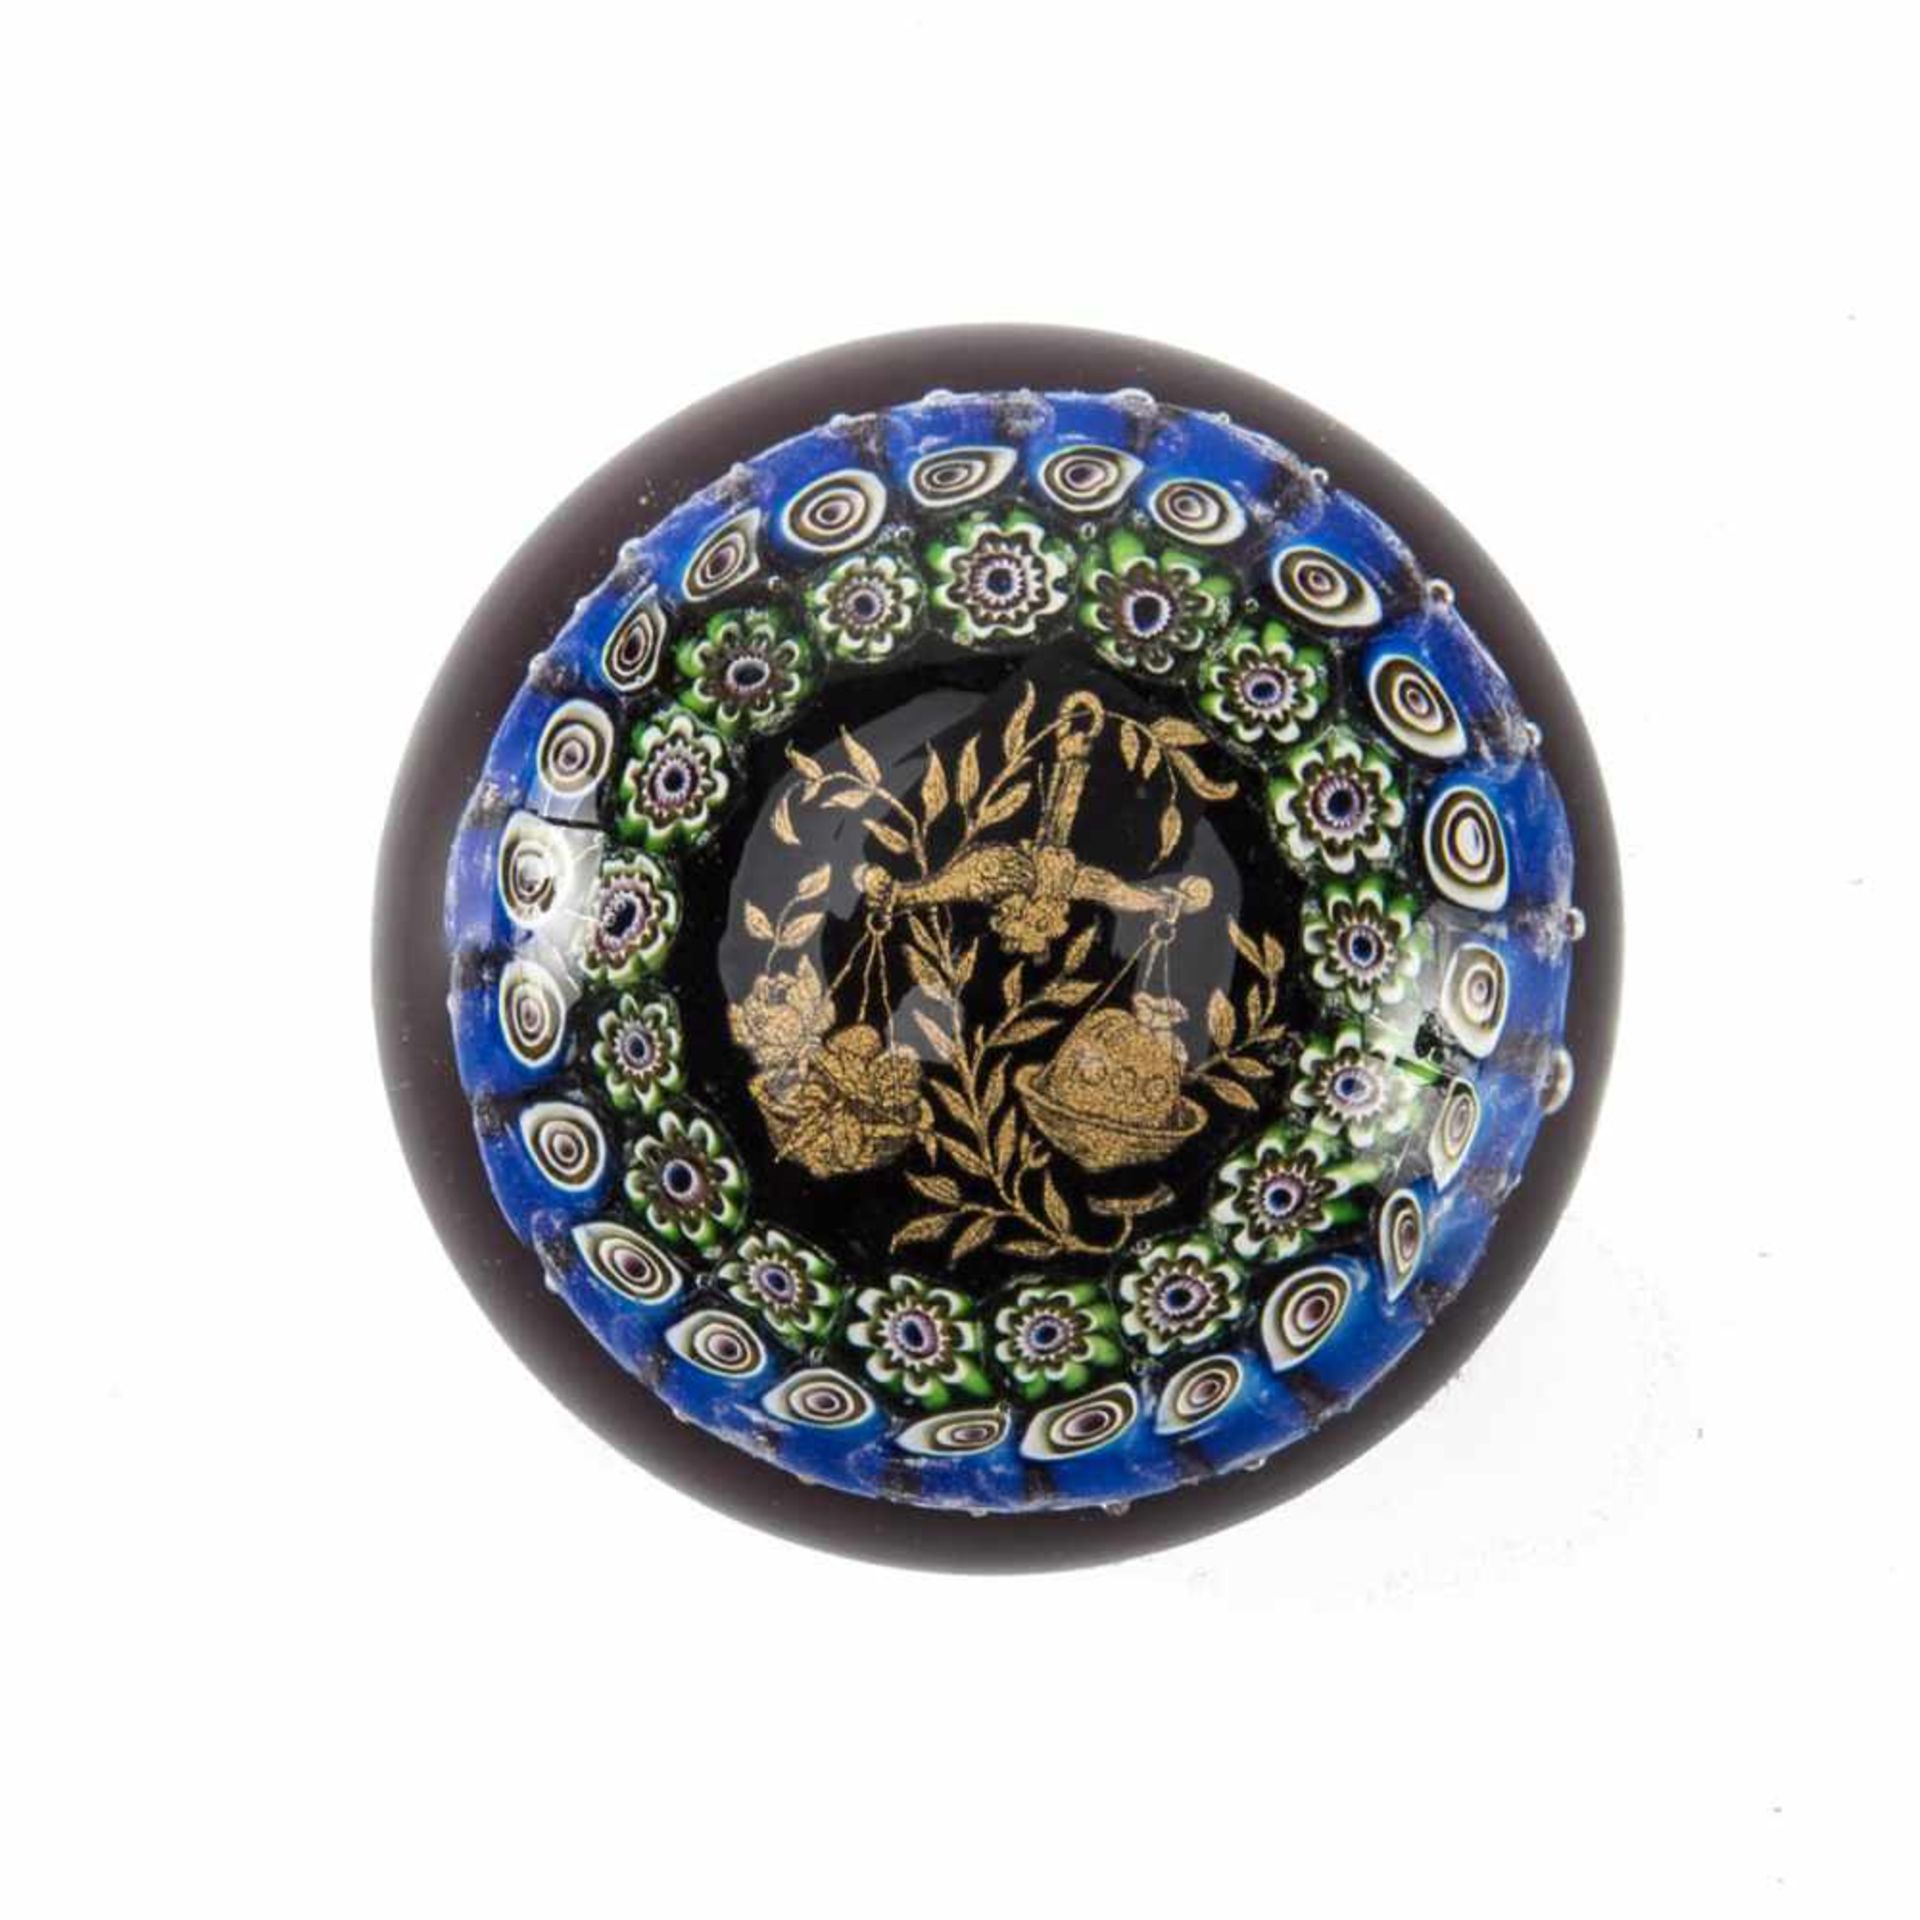 Paperweight, wohl Murano Halbkugelige Form, farbloses Glas, auf opakschwarzem Sockel Bordüre aus